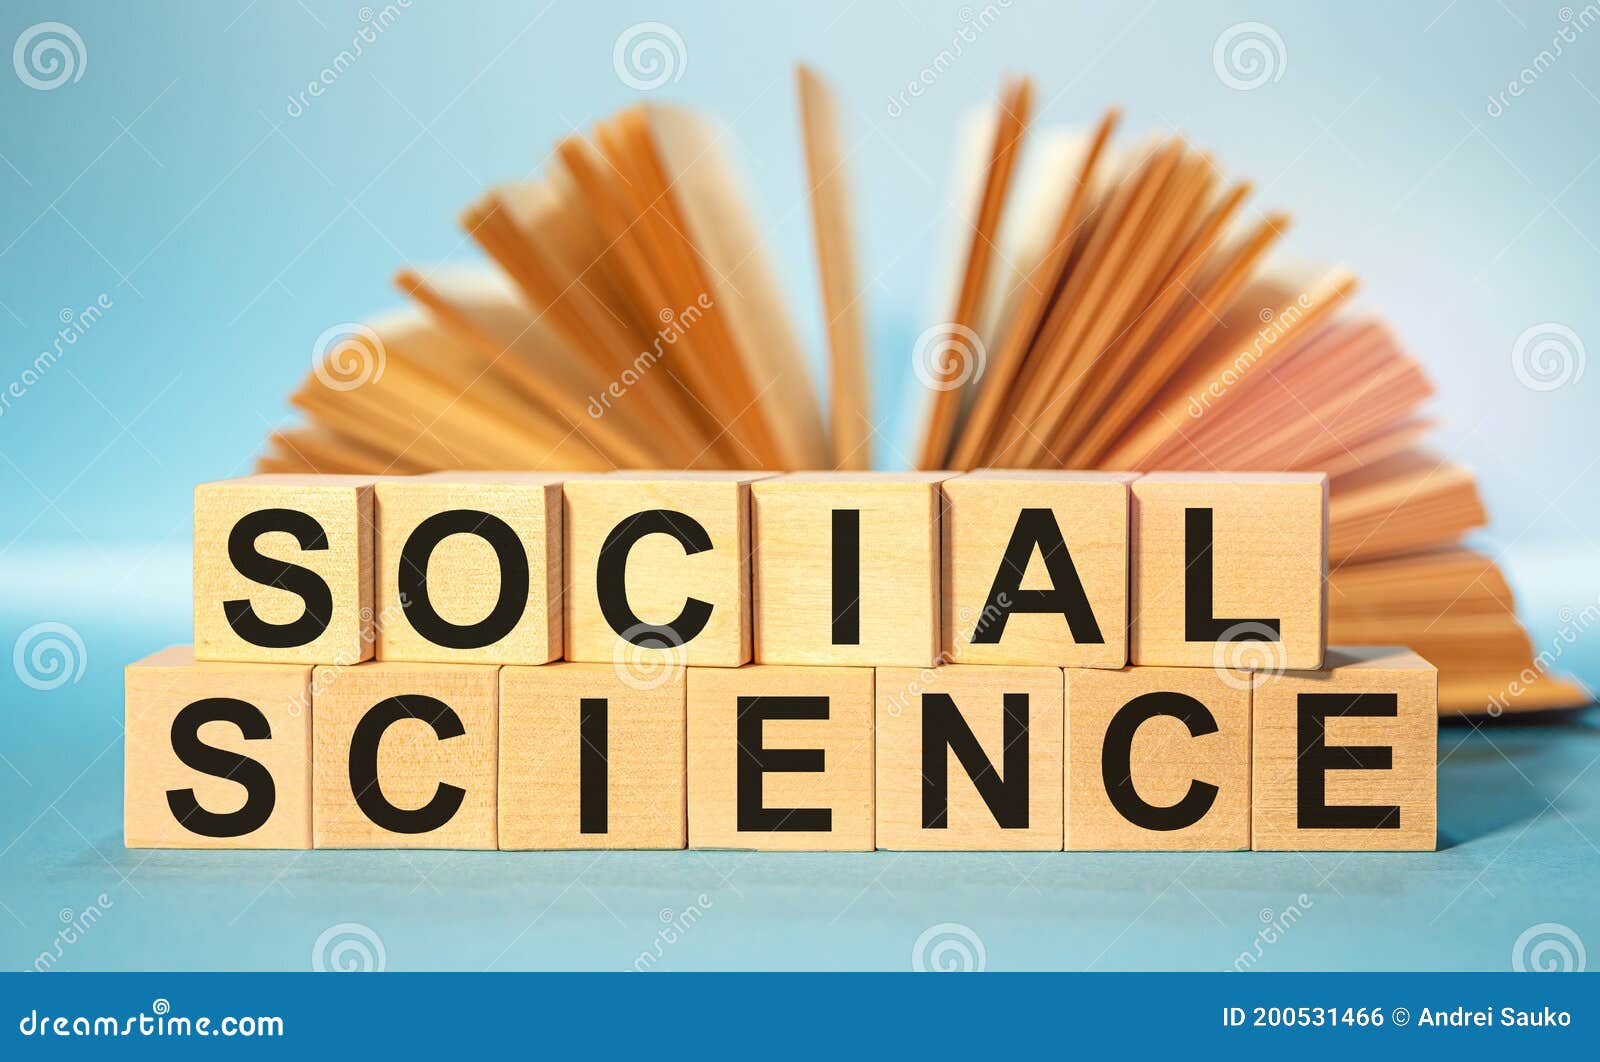 Details 100 social science background